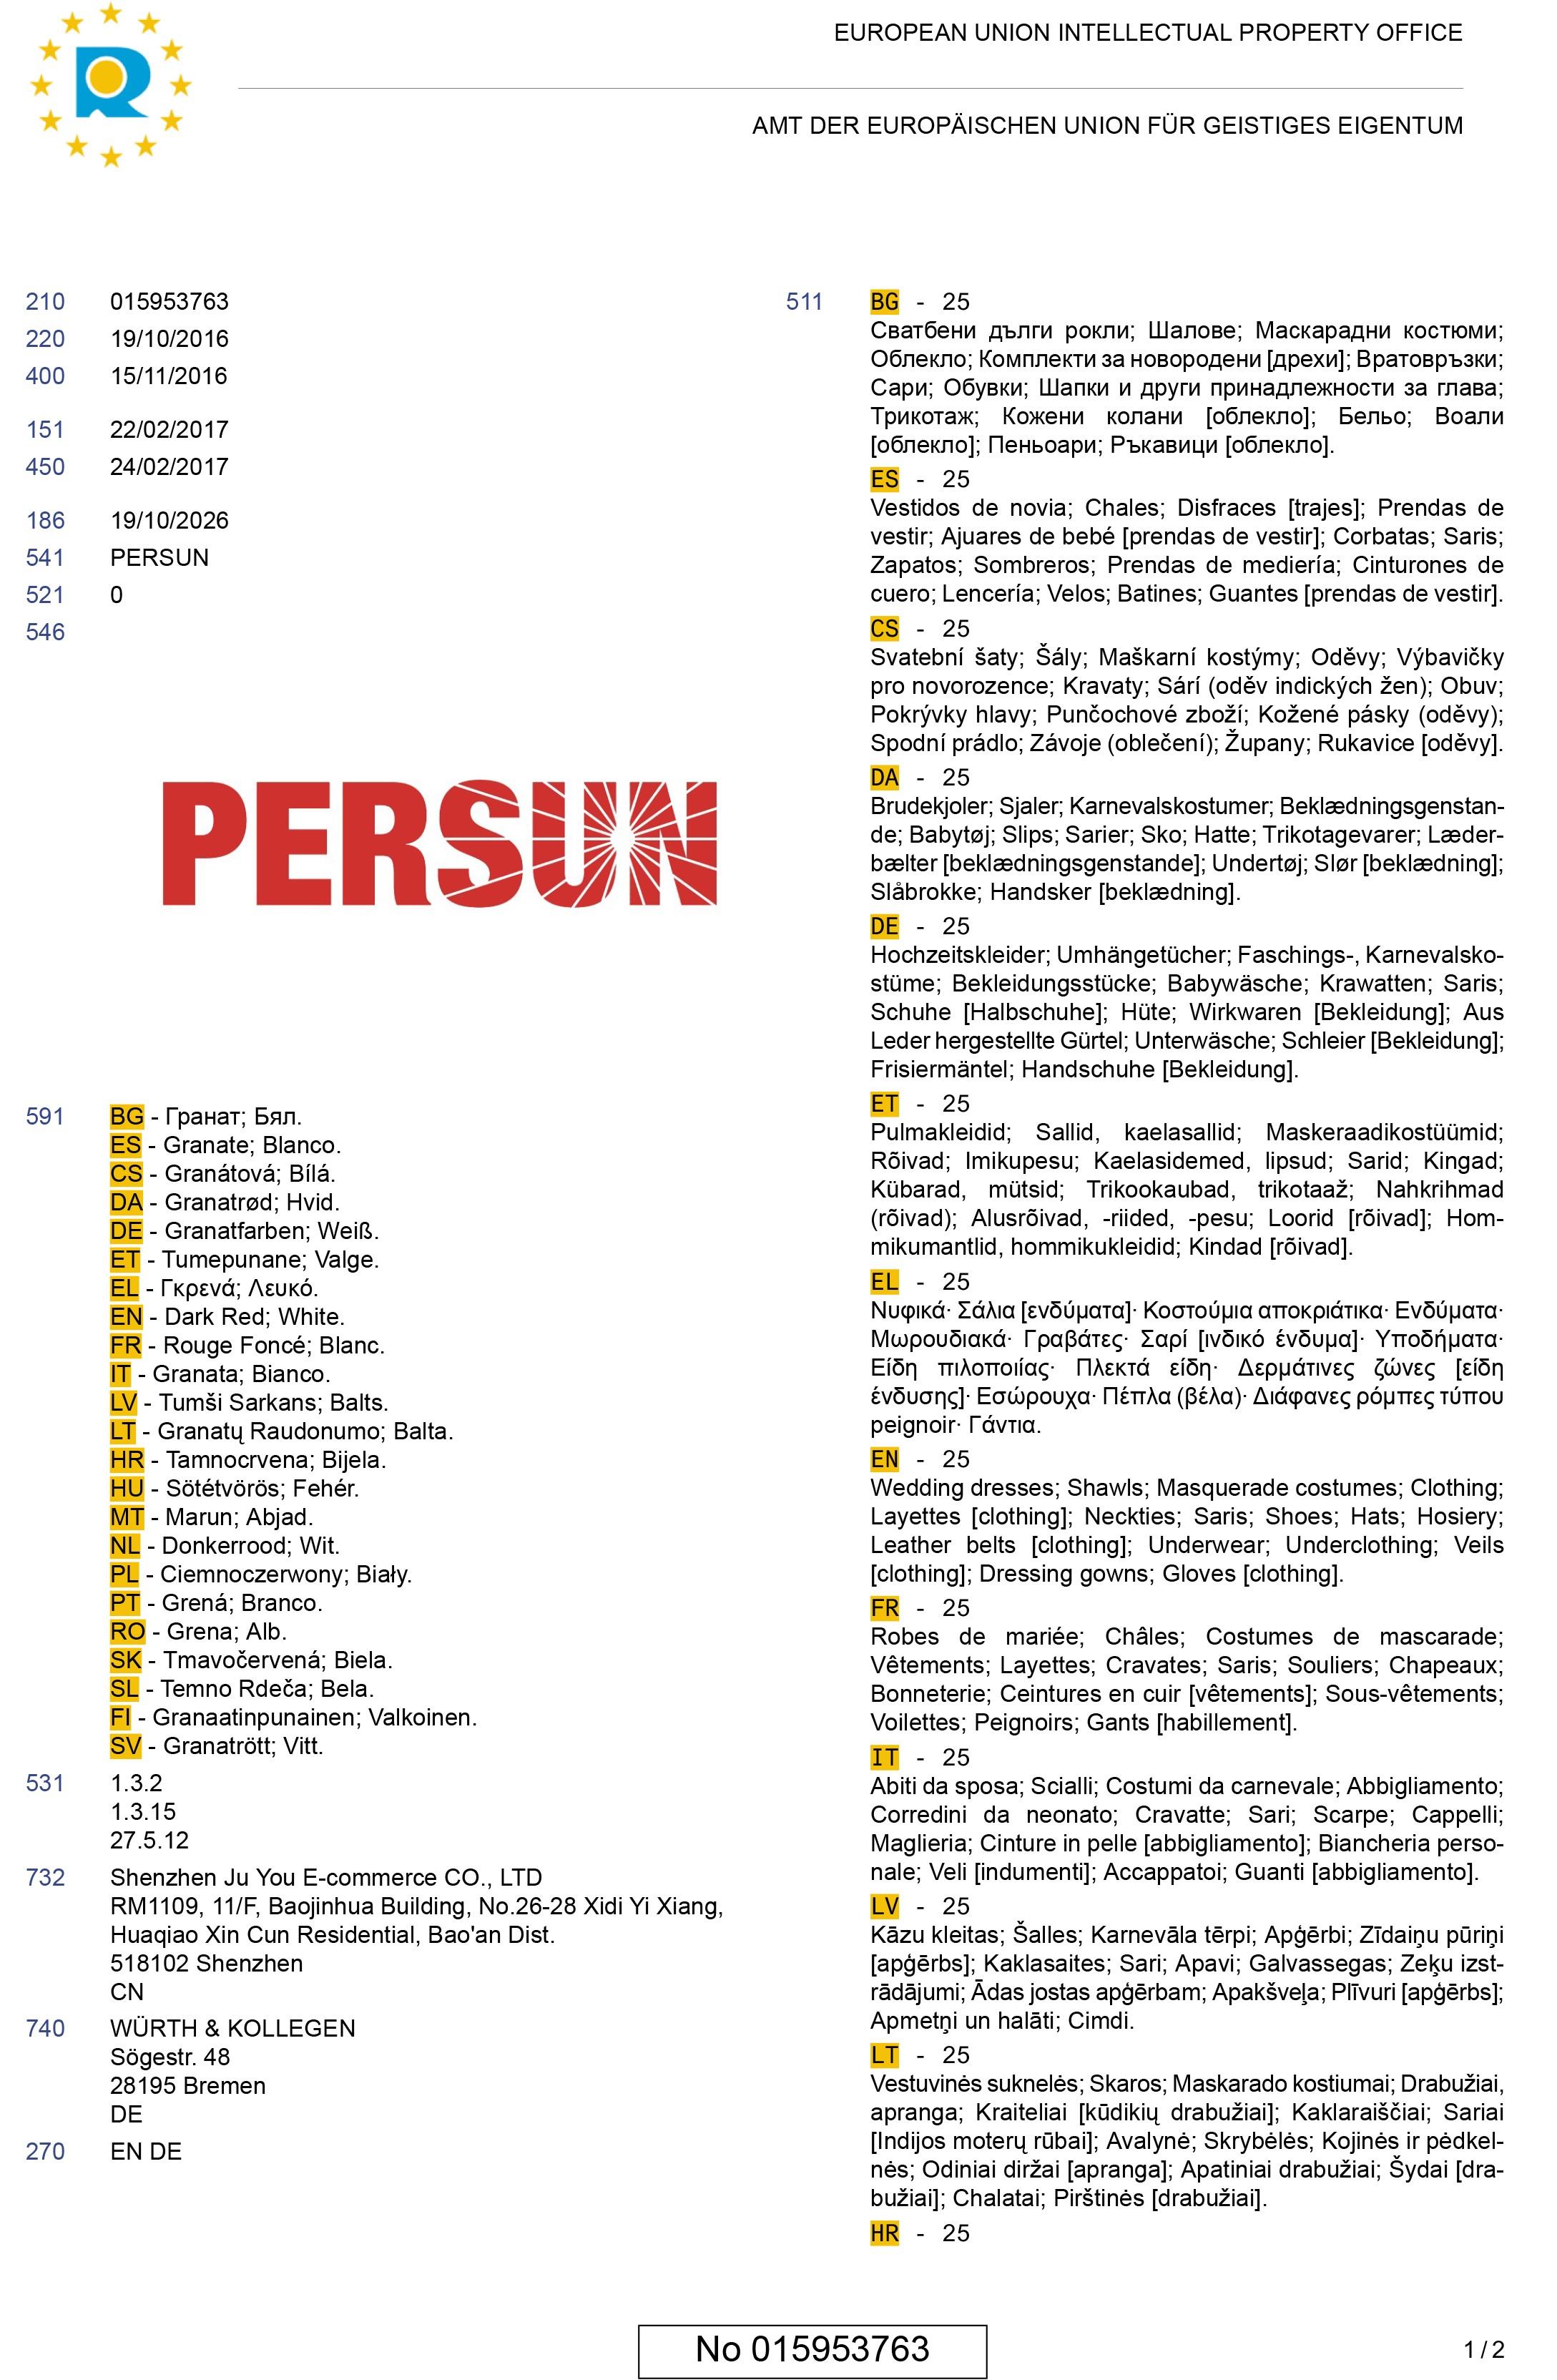 PERSUN-trademark-2